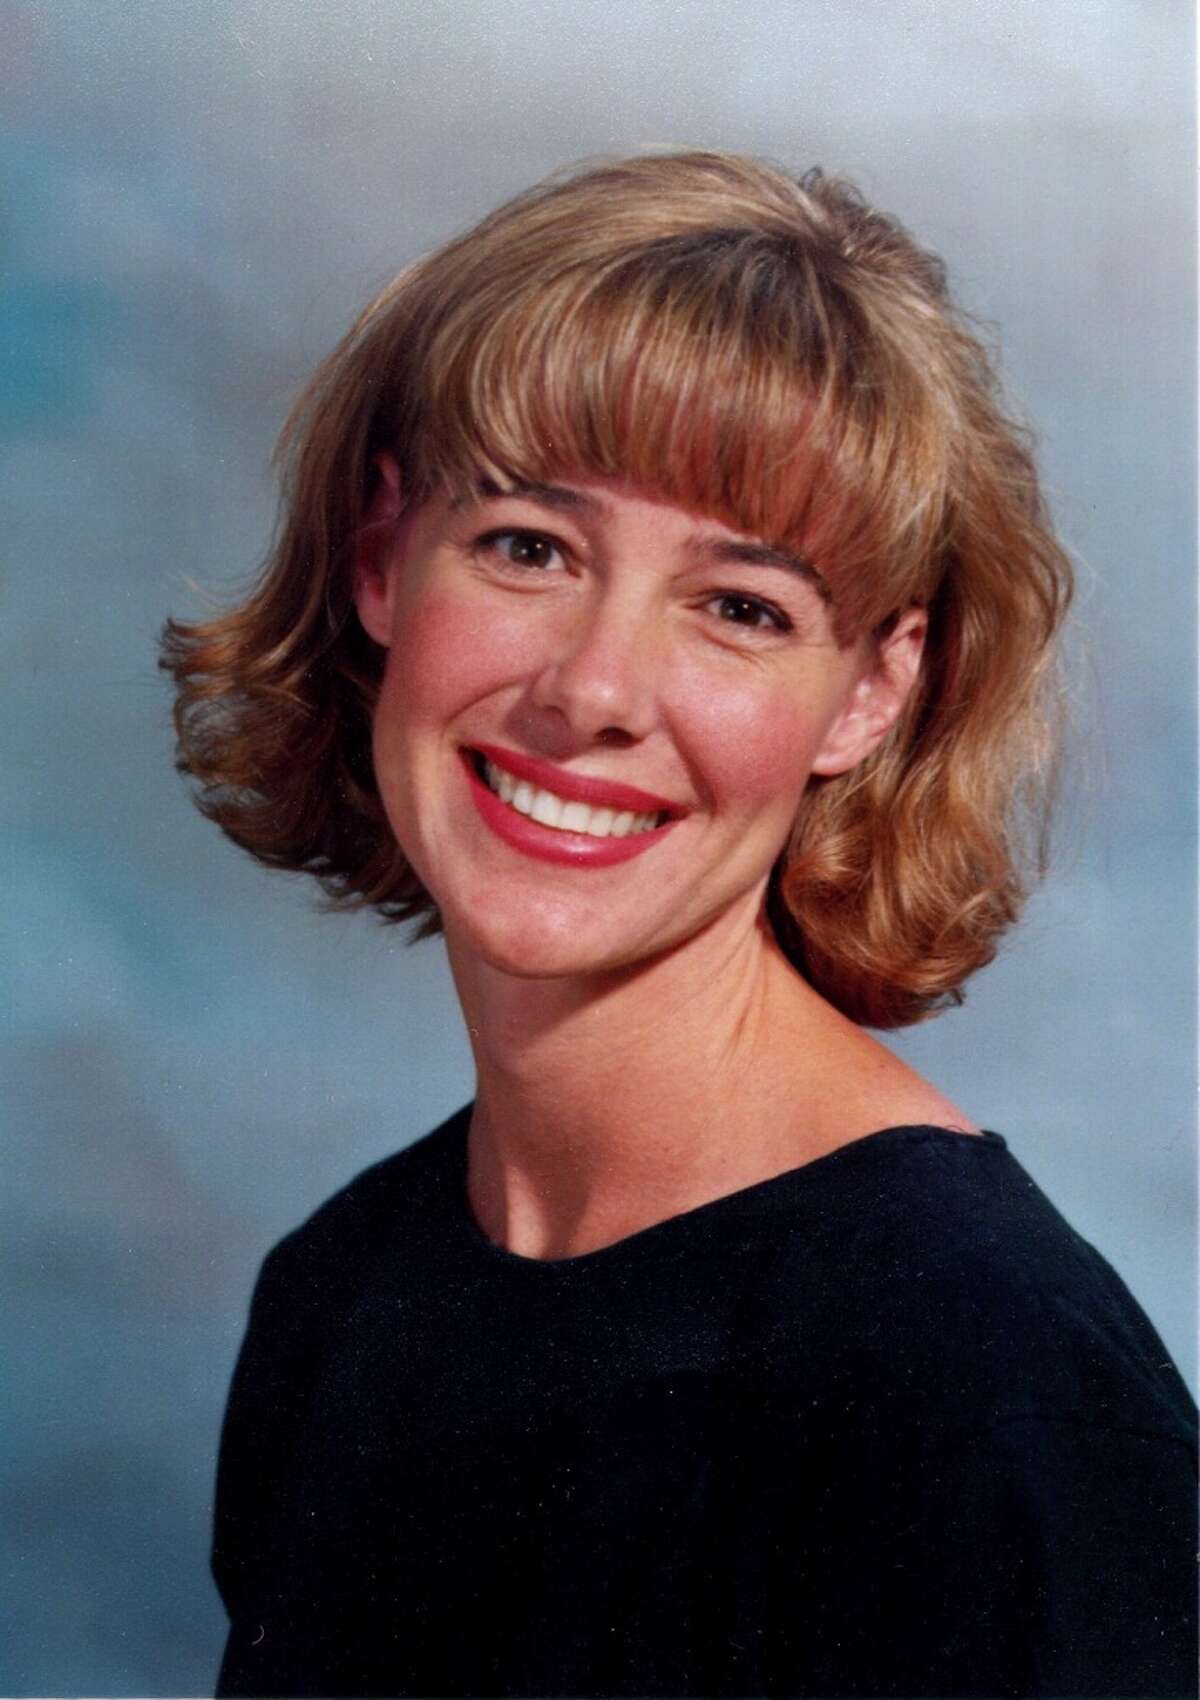 Highline School District teacher Mary K. LeTourneau, as seen in her Fall 1996 school photo.